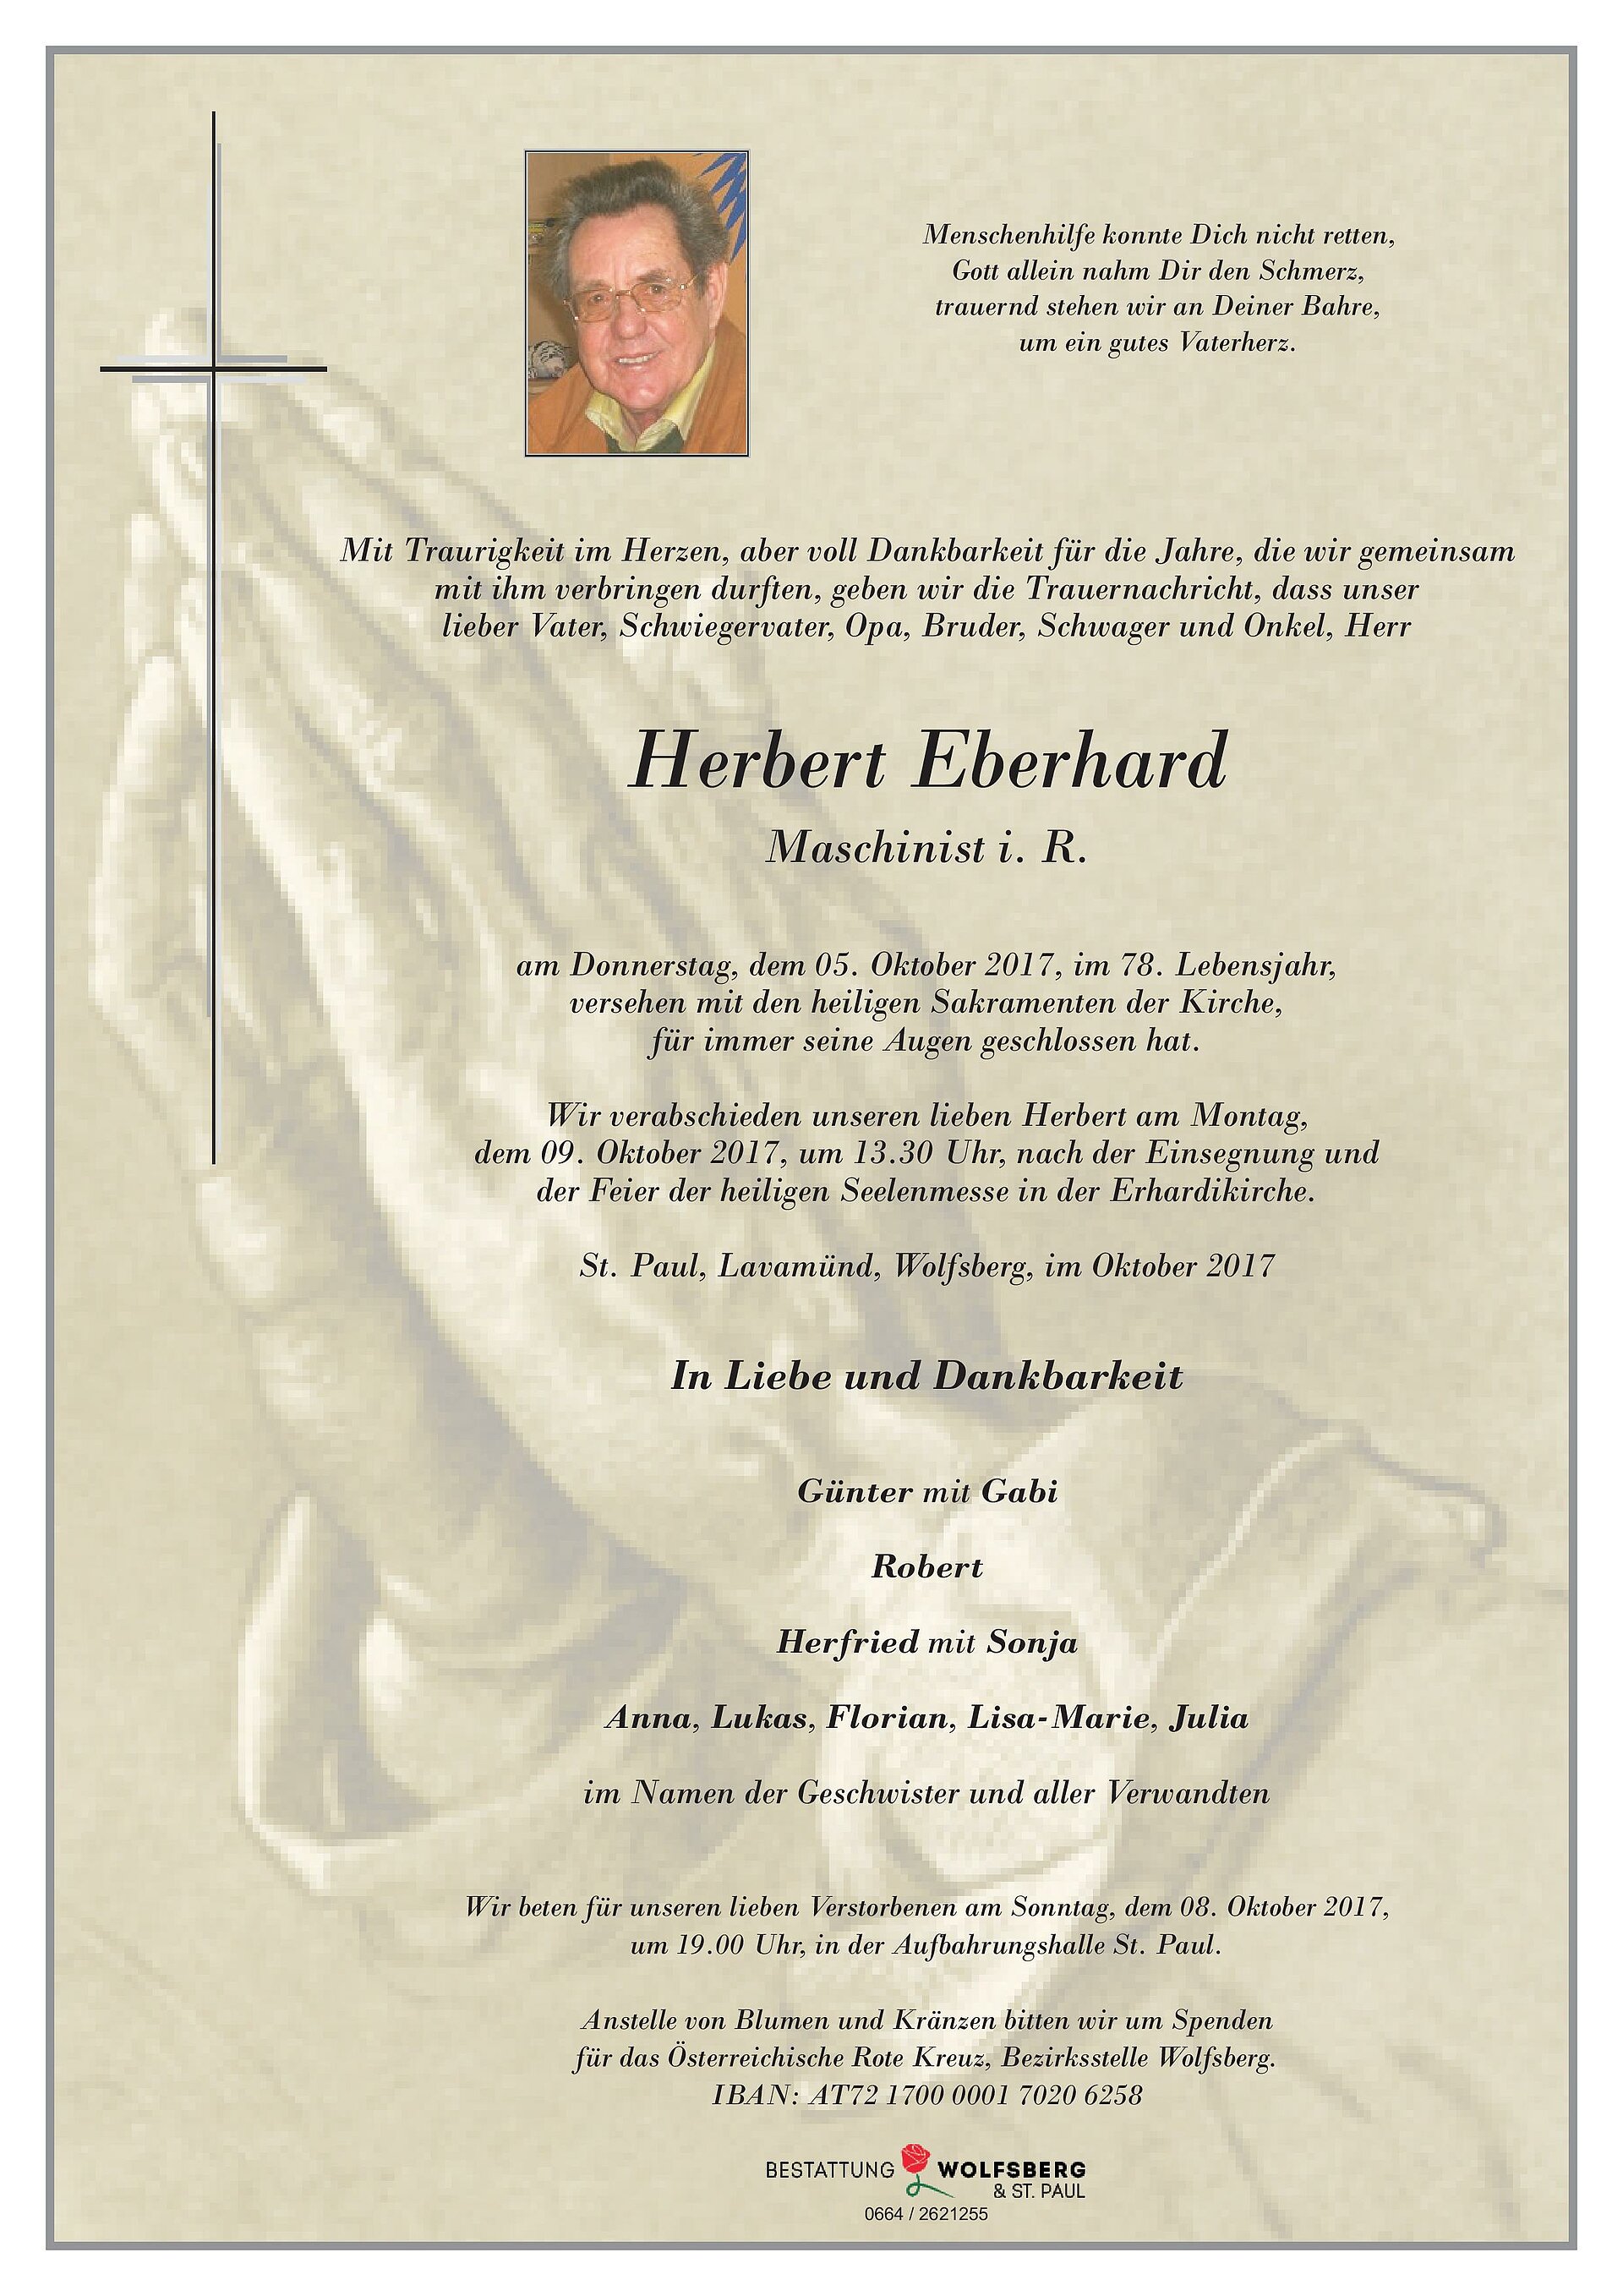 Herbert-Eberhard-page-001.jpg